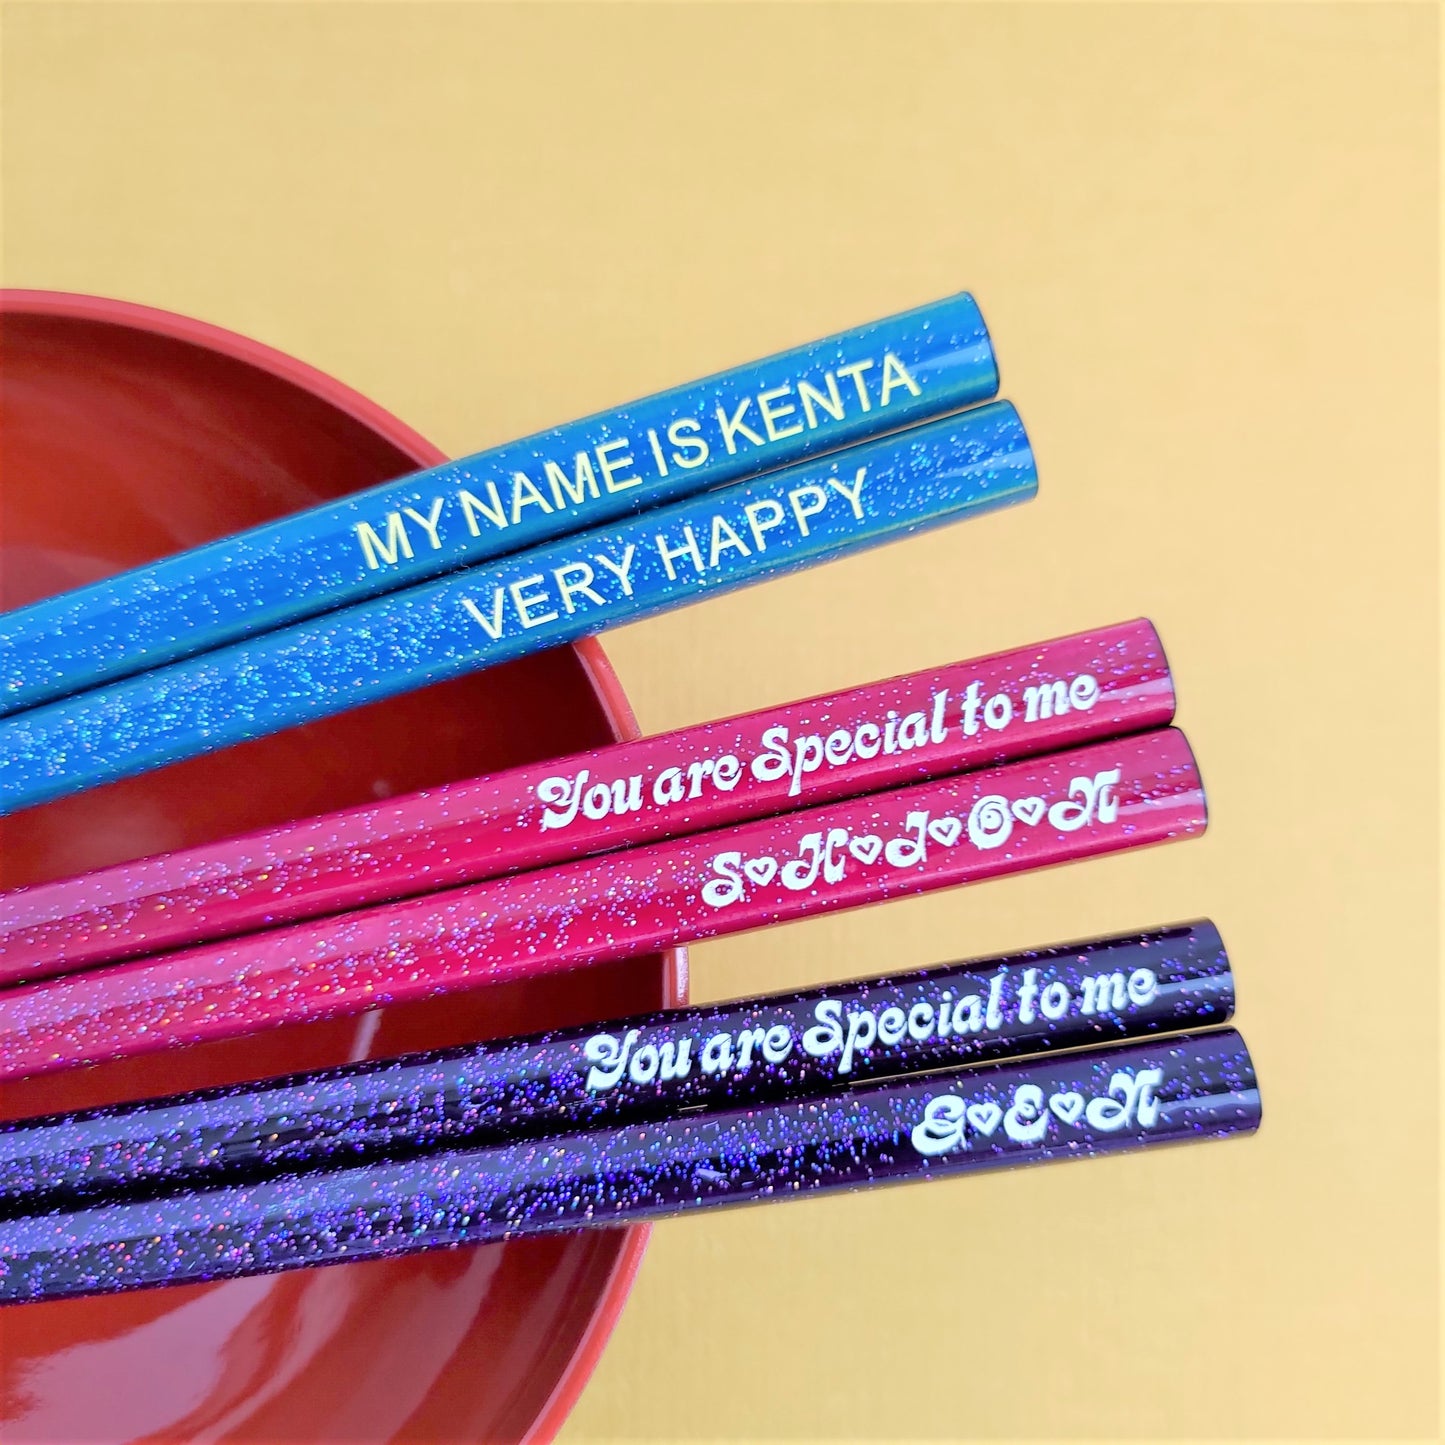 Shiny stars Japanese chopsticks blue red purple - DOUBLE PAIR